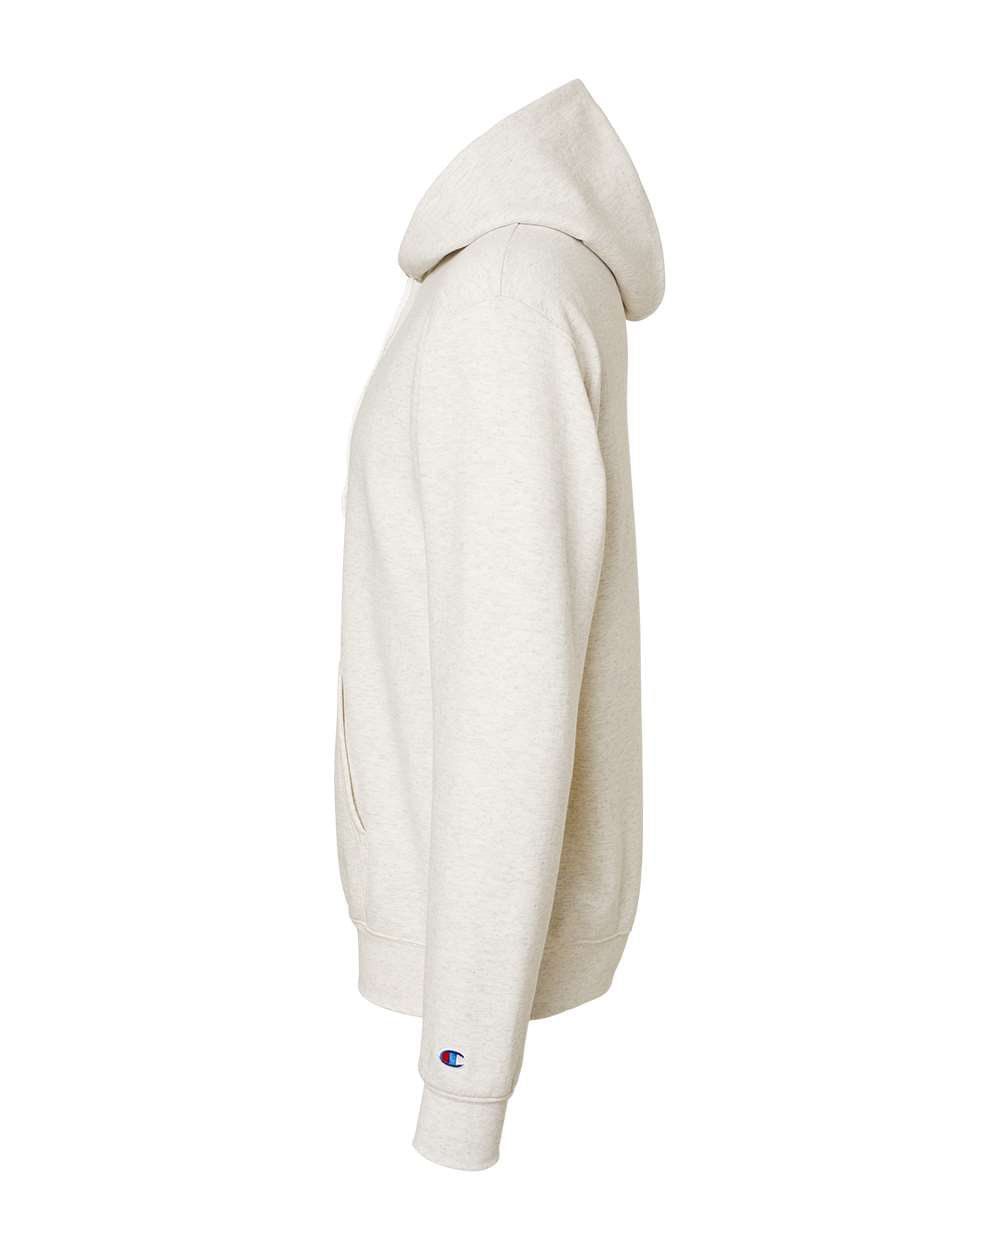 Champion Powerblend® Hooded Sweatshirt S700 #color_Oatmeal Heather